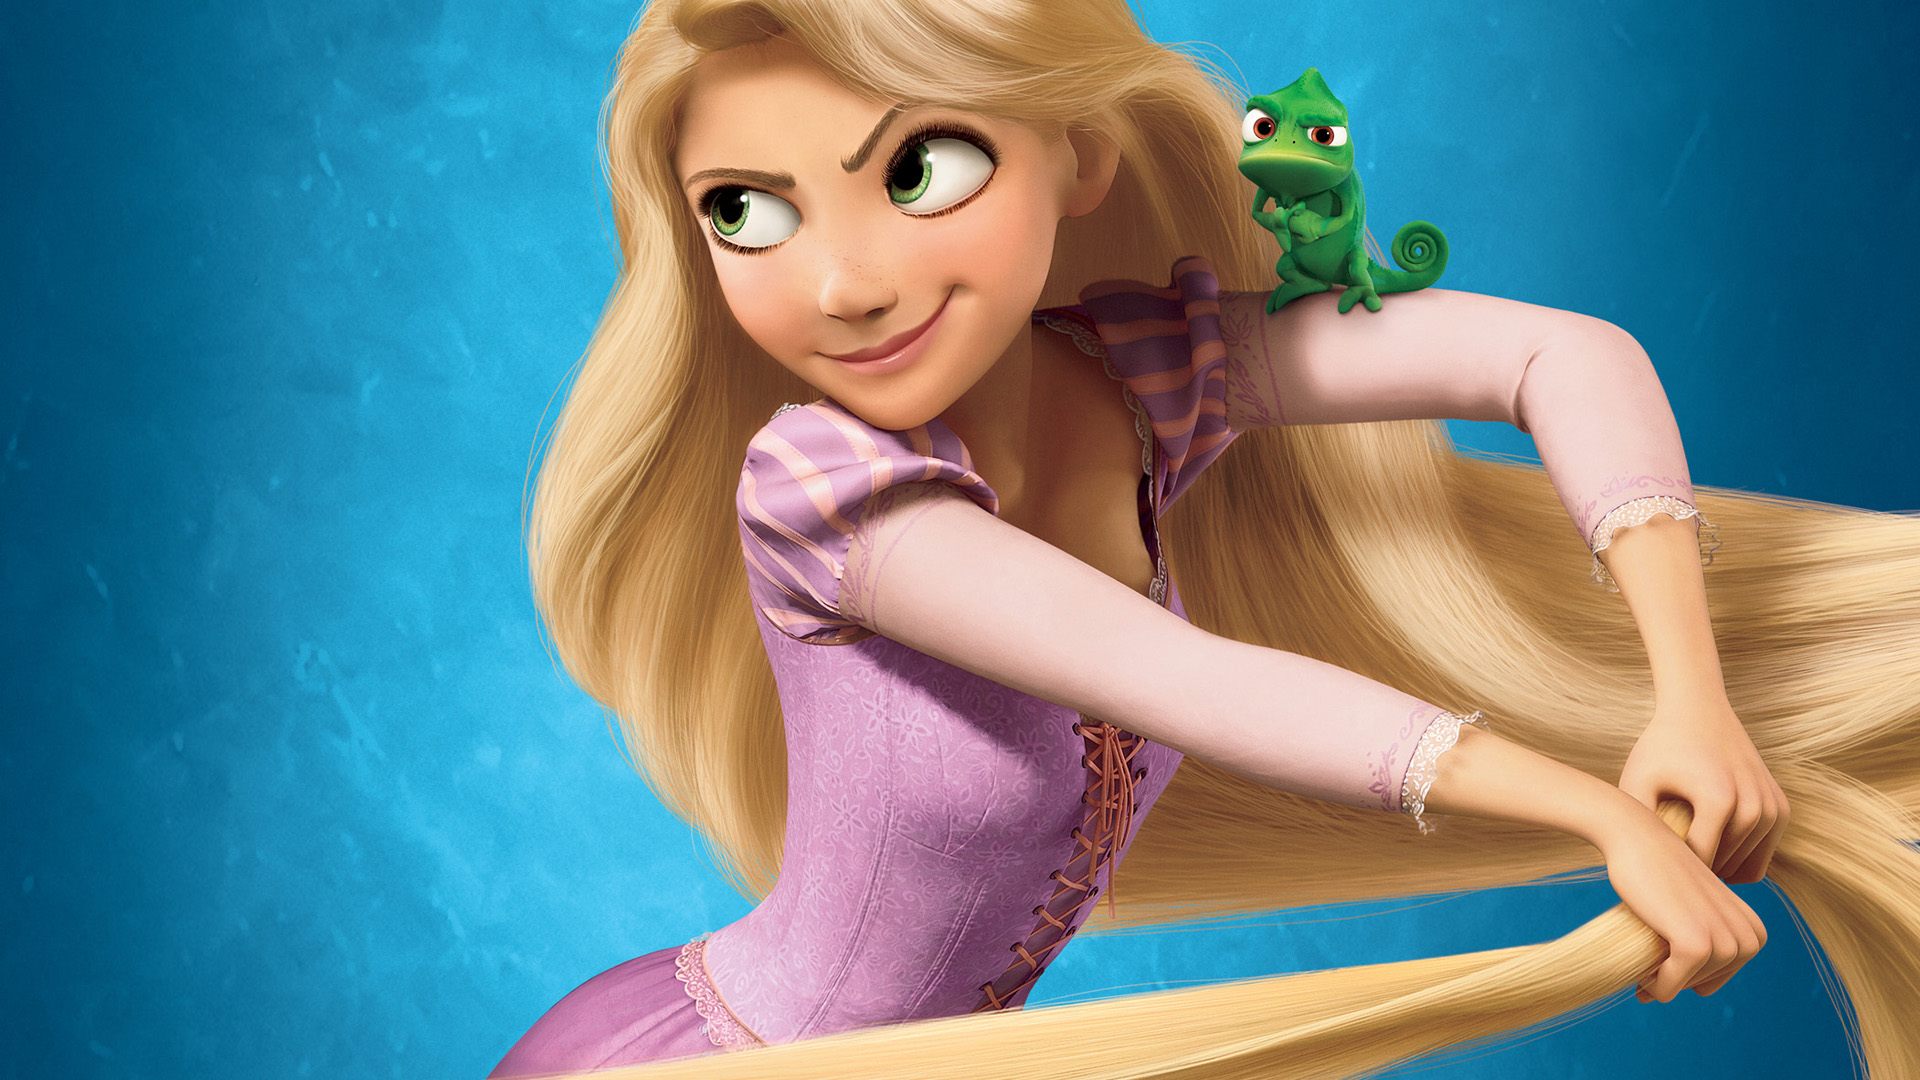 Pascal from Disney's Tangled Movie Desktop Wallpaper